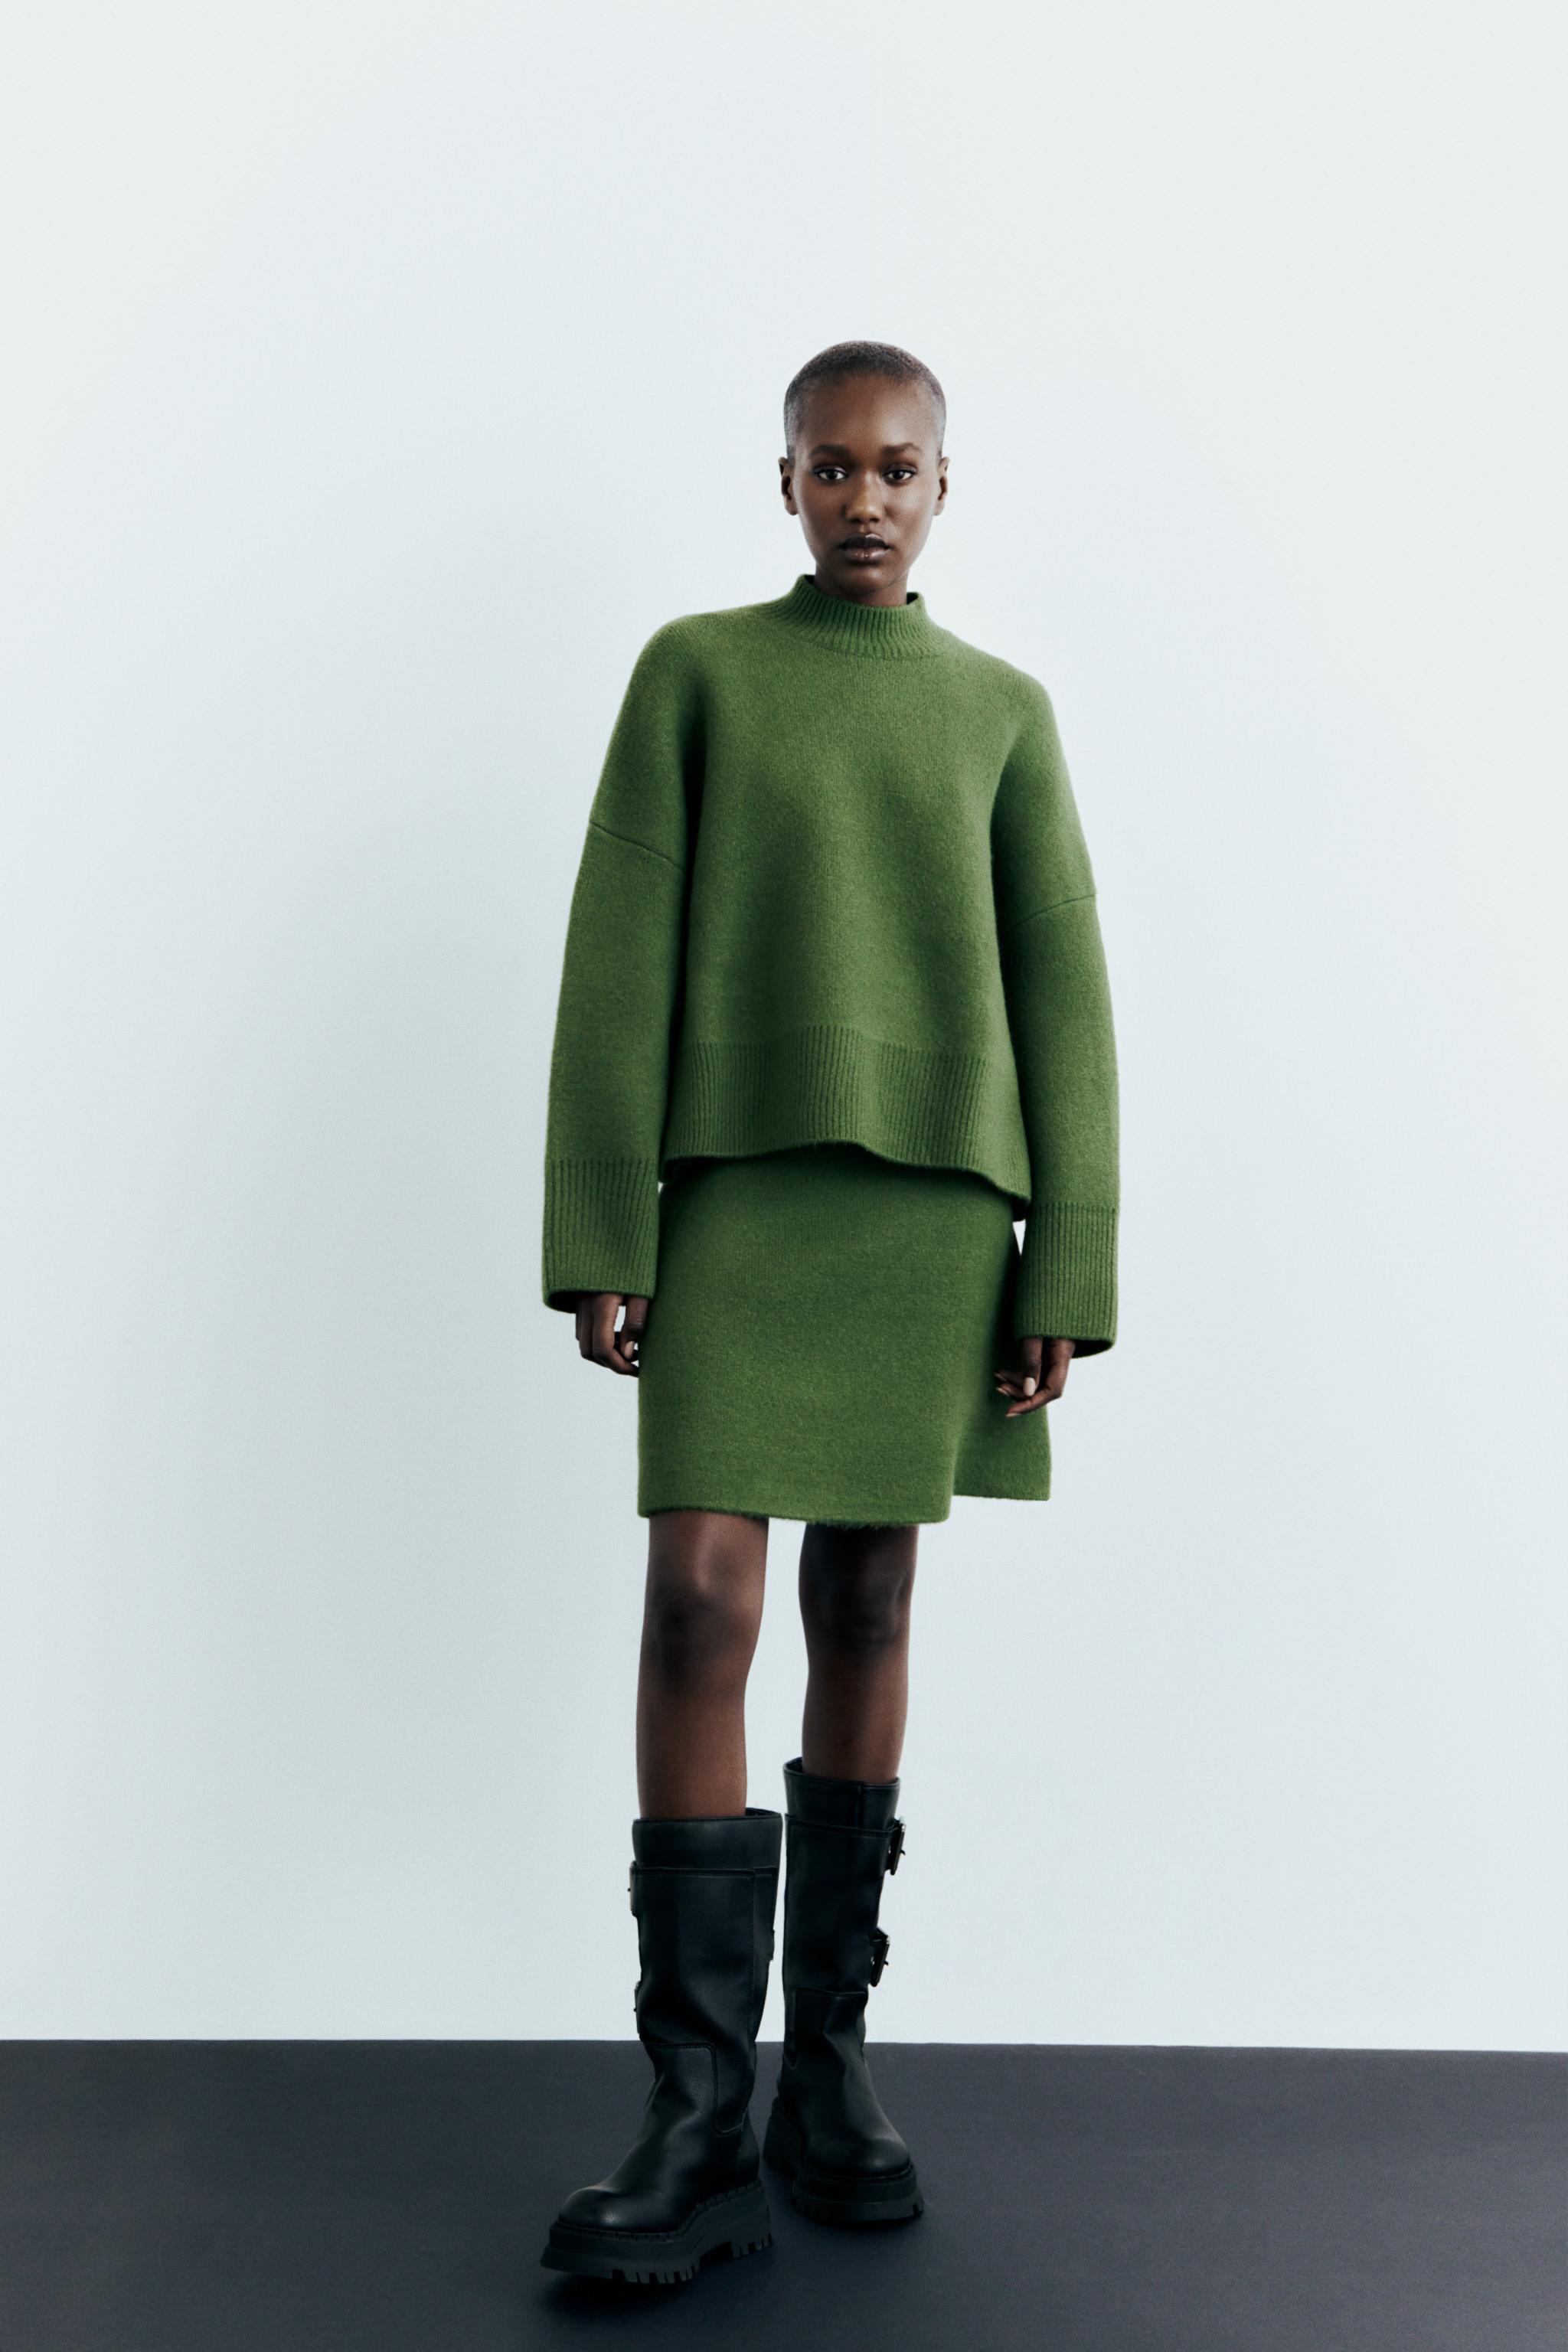 Zara Womens Sweatshirt Small Green Pullover Hoodie Pocket Lightweight  Distressed